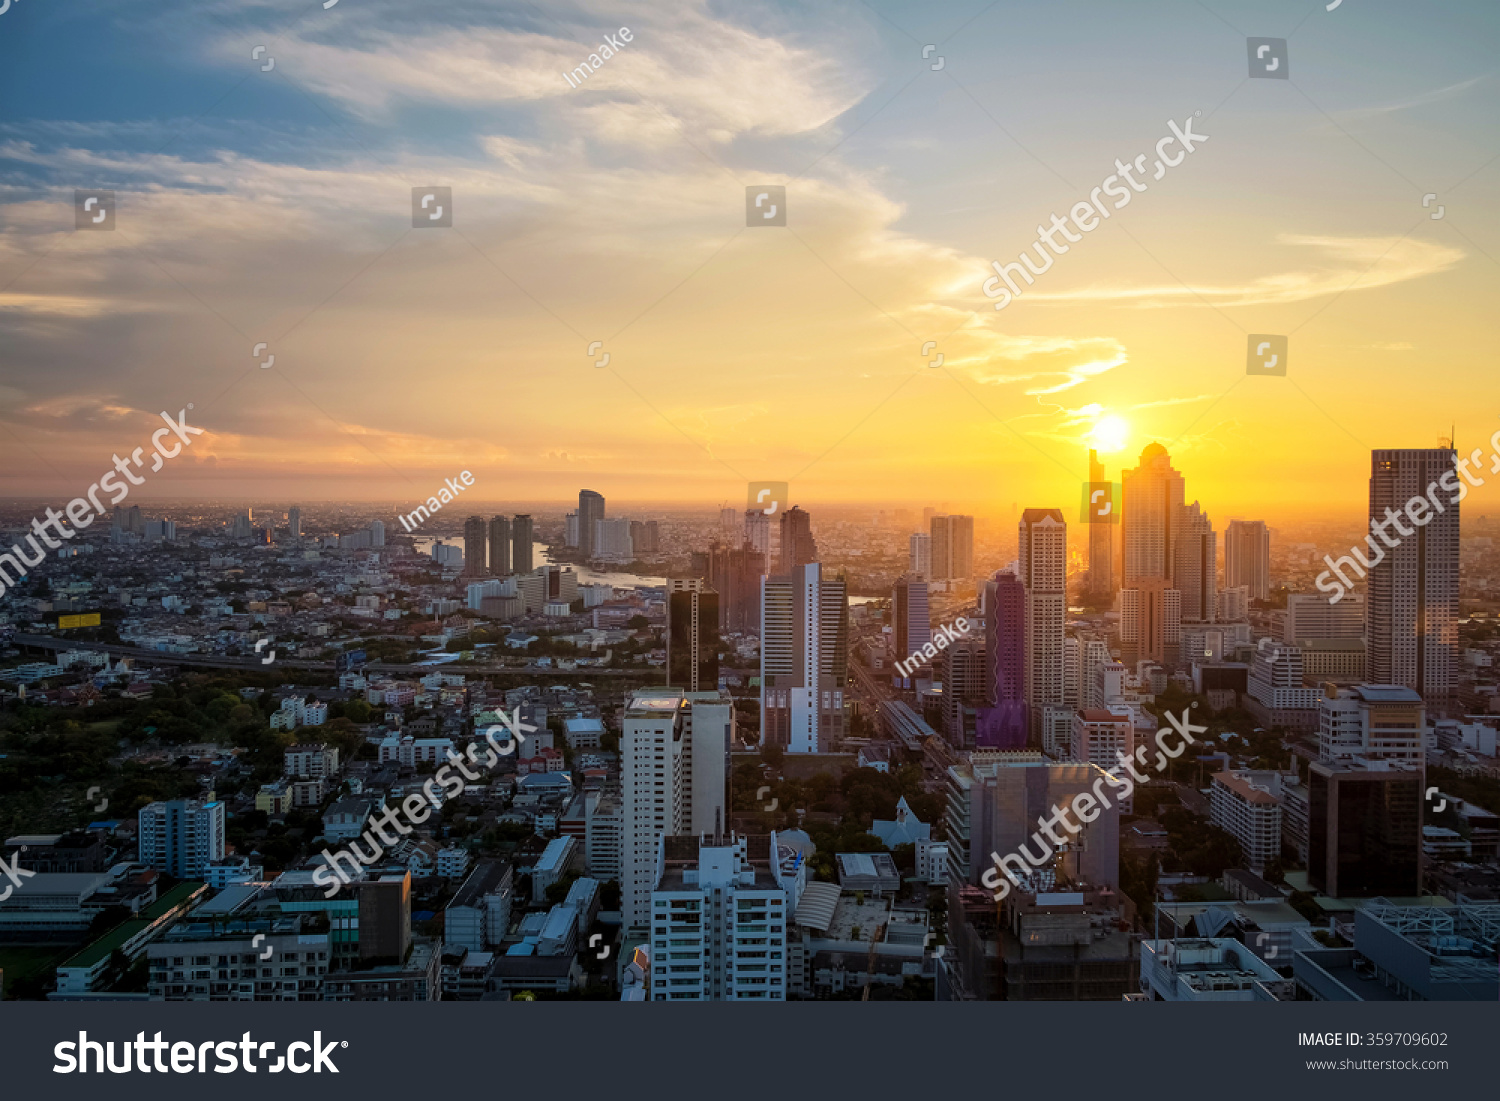 Building cityscape sunset #359709602